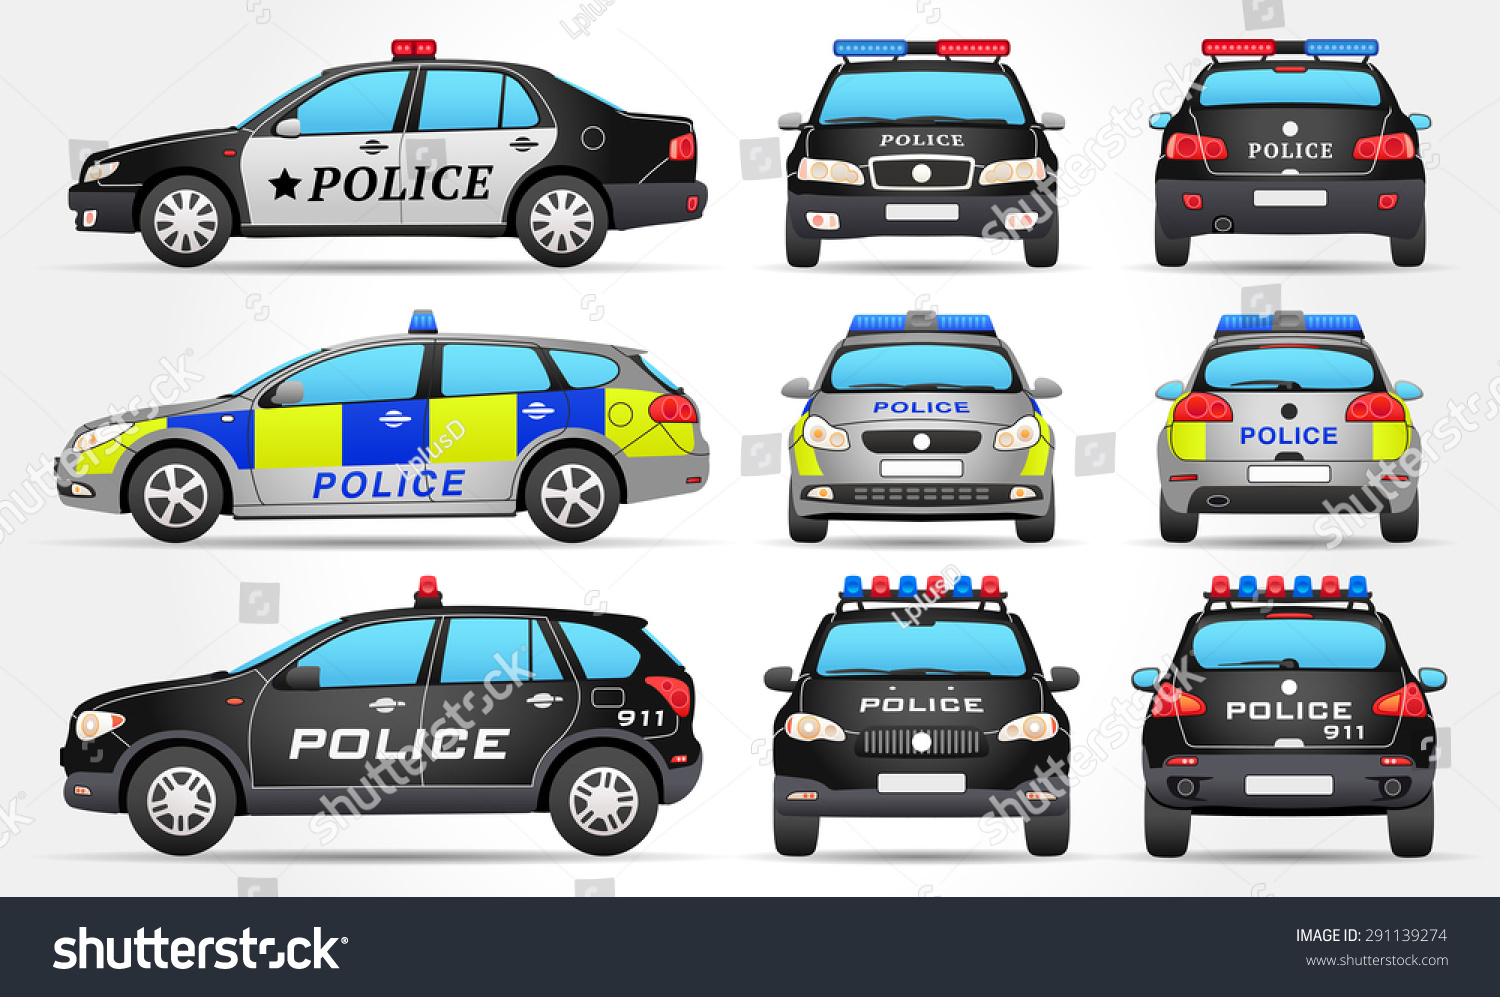 SVG of Vector Police Cars - Side - Front - Back view svg